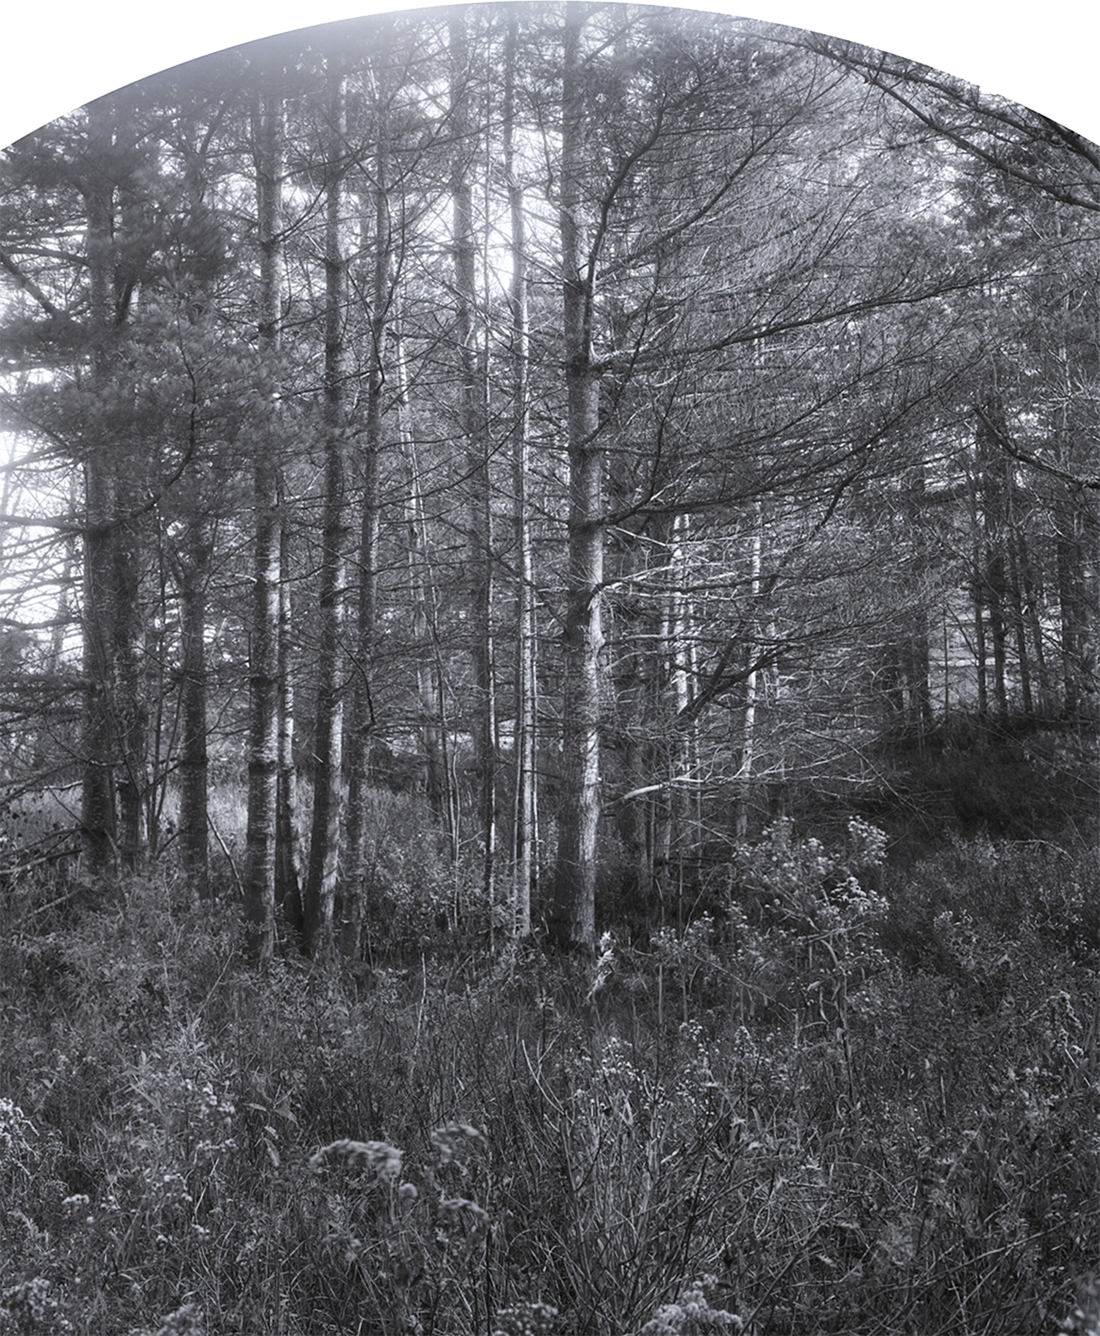   White Pines, Lunenburg, October, 2012  